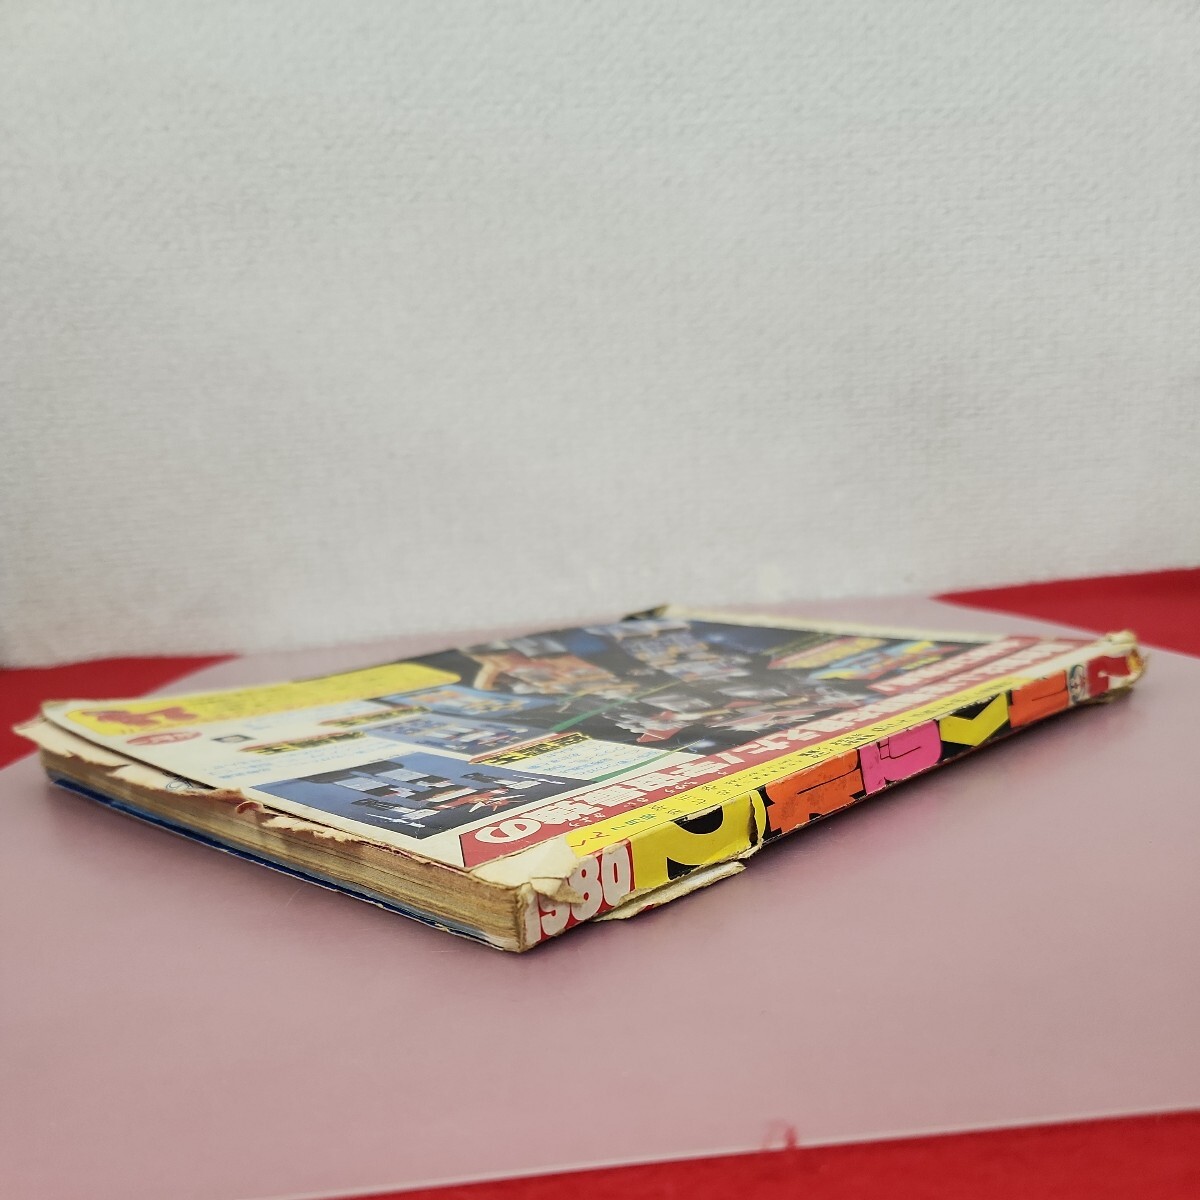 D59-102 てれびくん 1980年7月号 付録欠品 ウルトラマン80大ファイト号漫画連載 目立つ破れ折れなど有 テープ補正シール張り付け有 の画像3